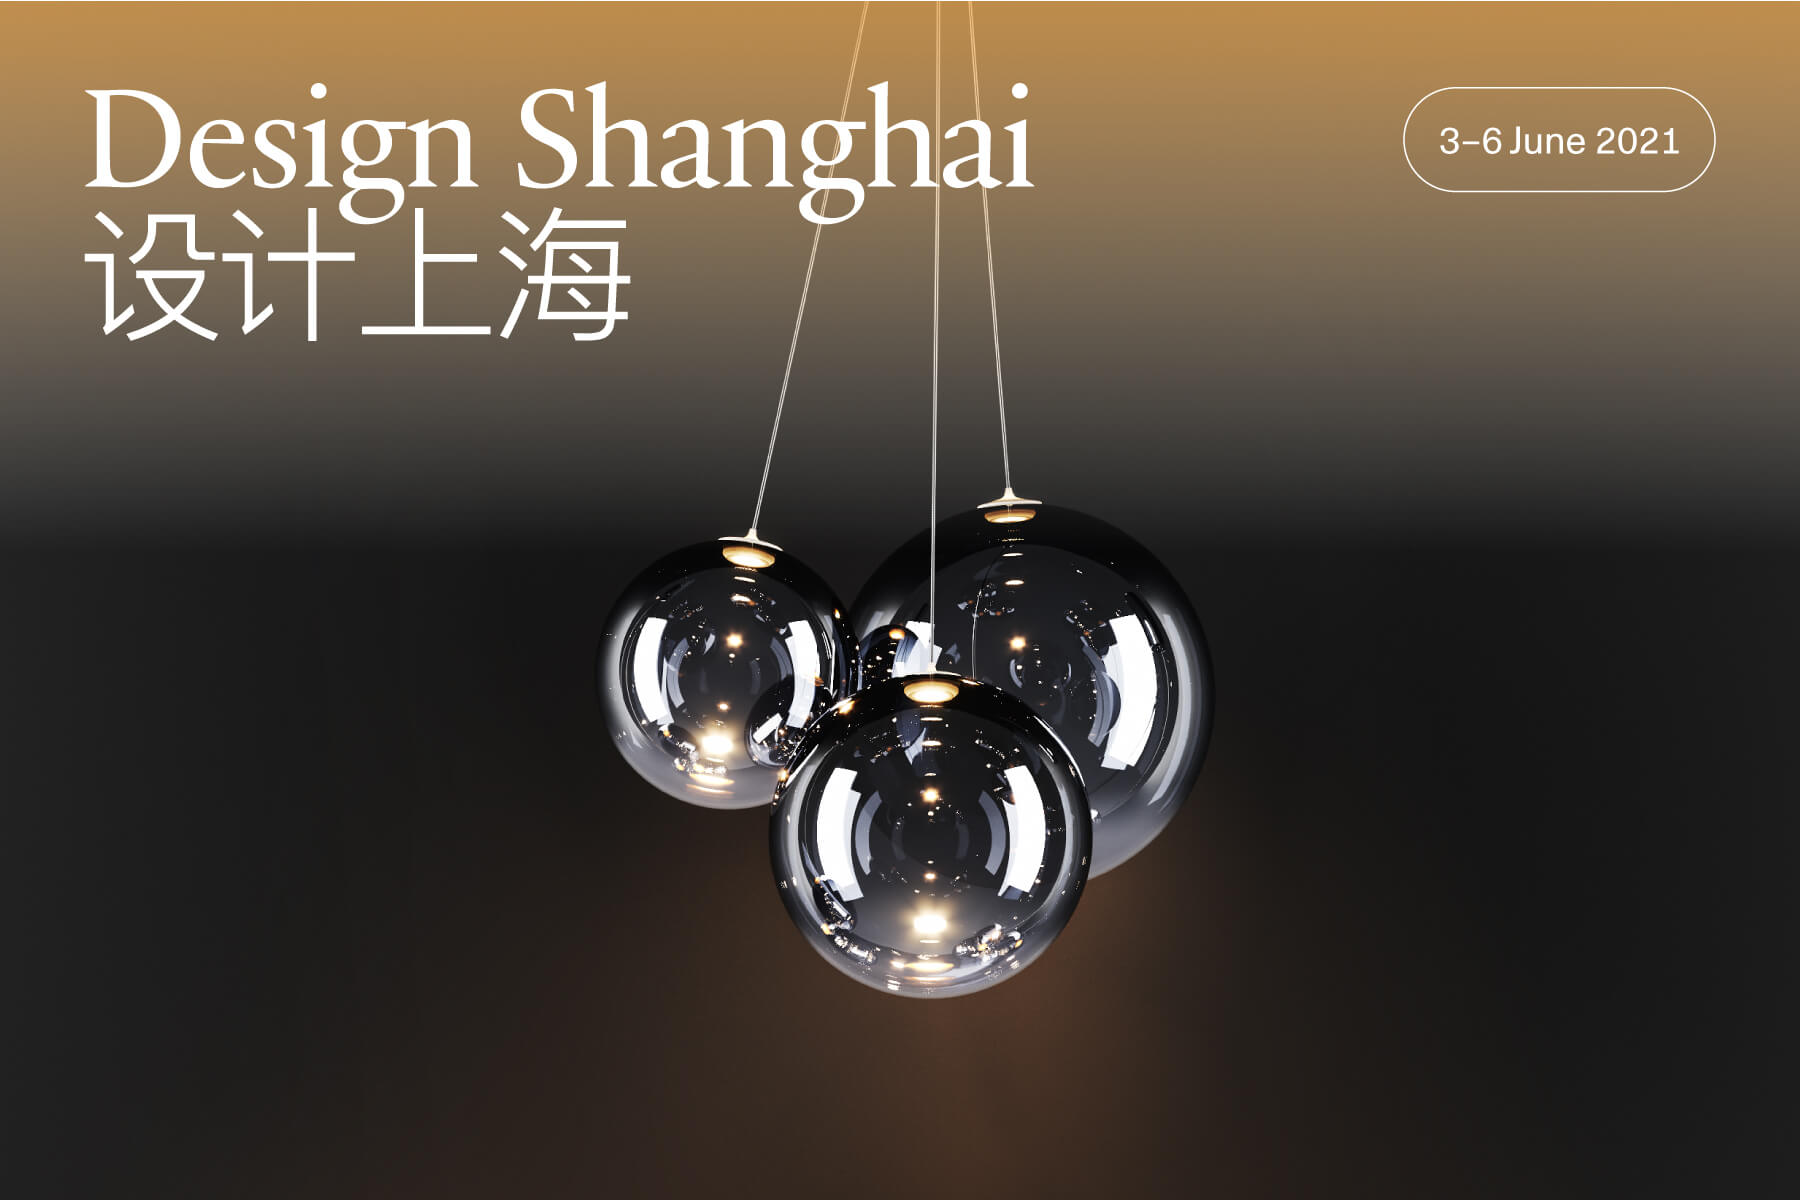 Design Shanghai 2021